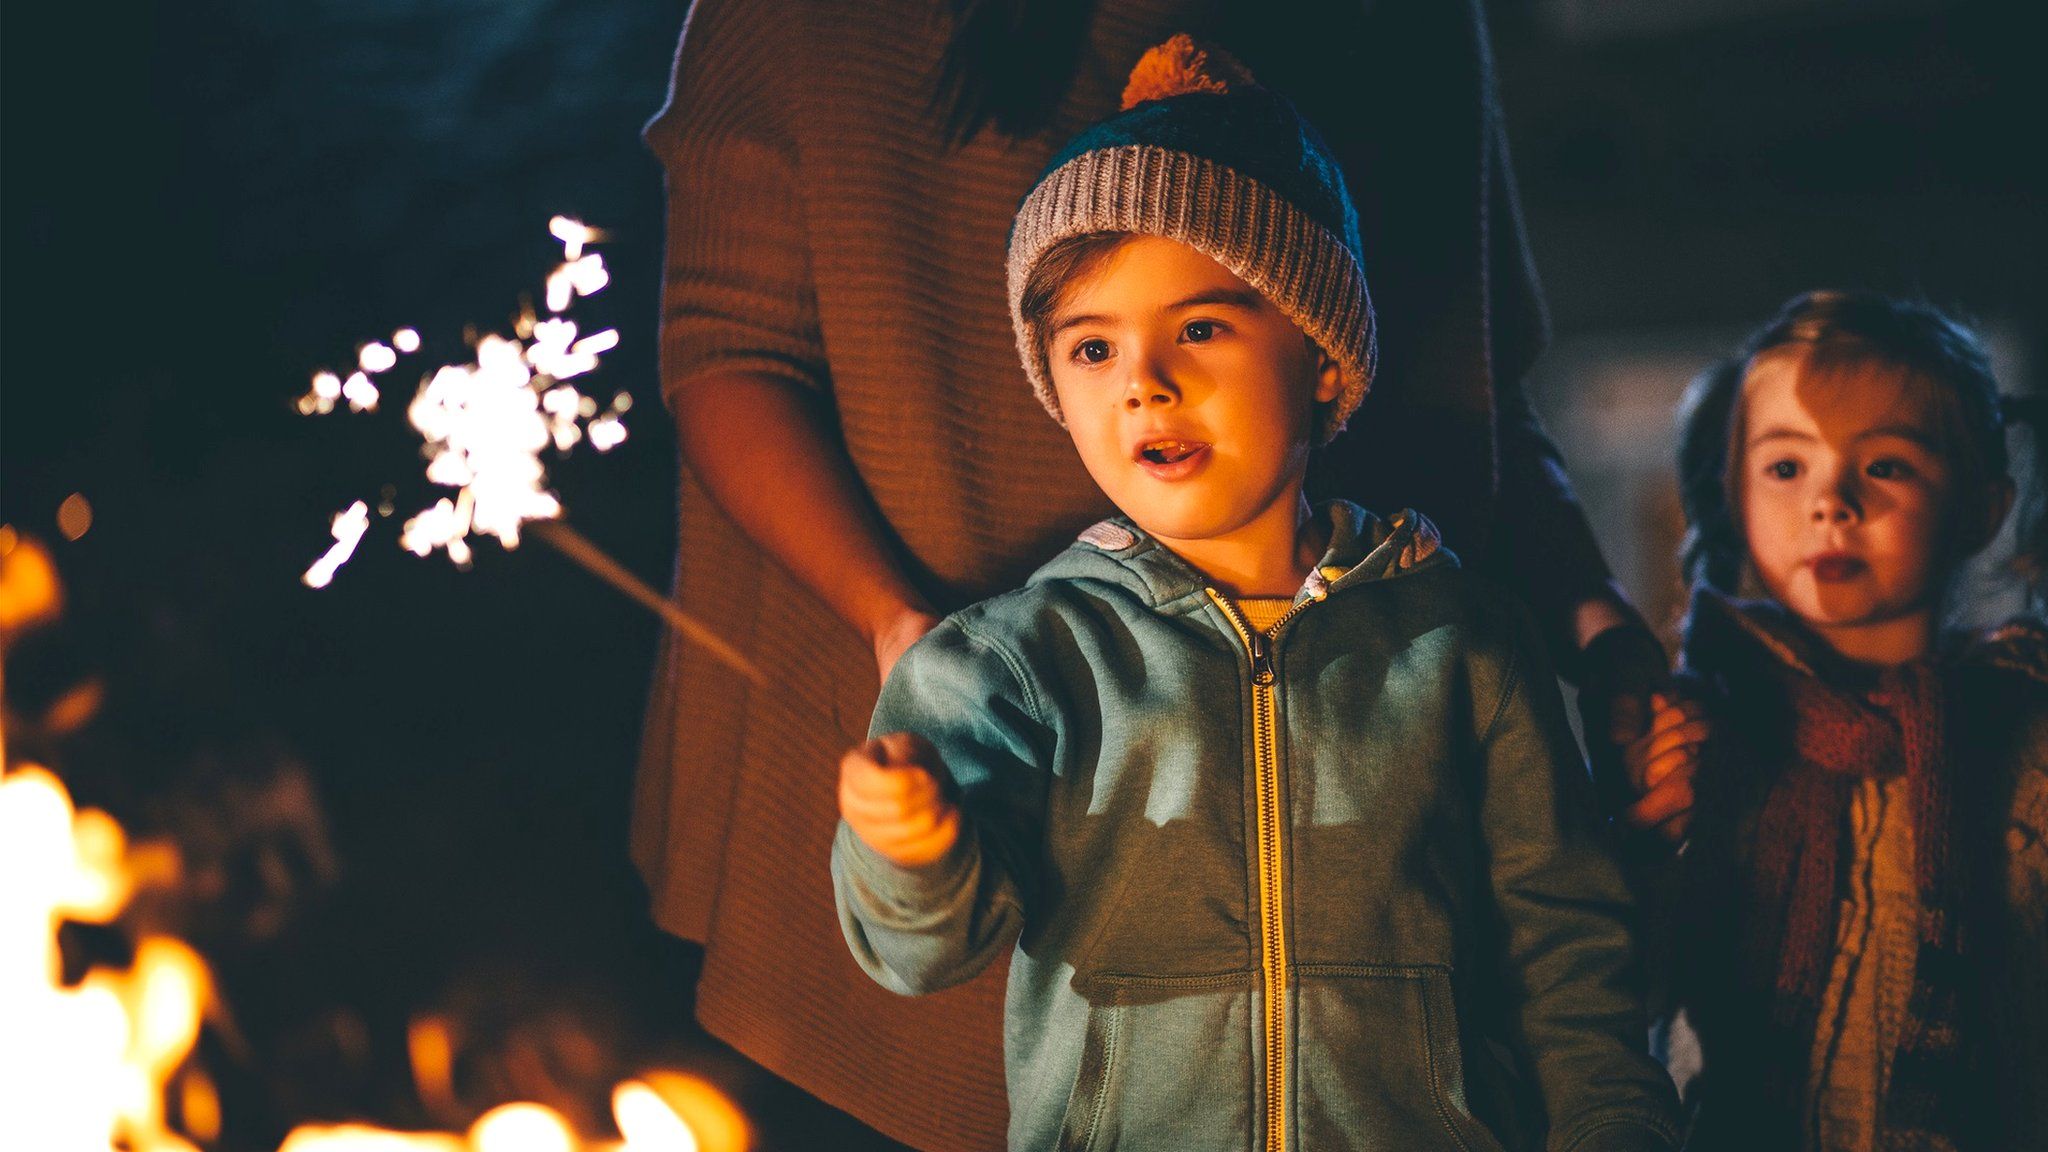 Child holding a sparkler